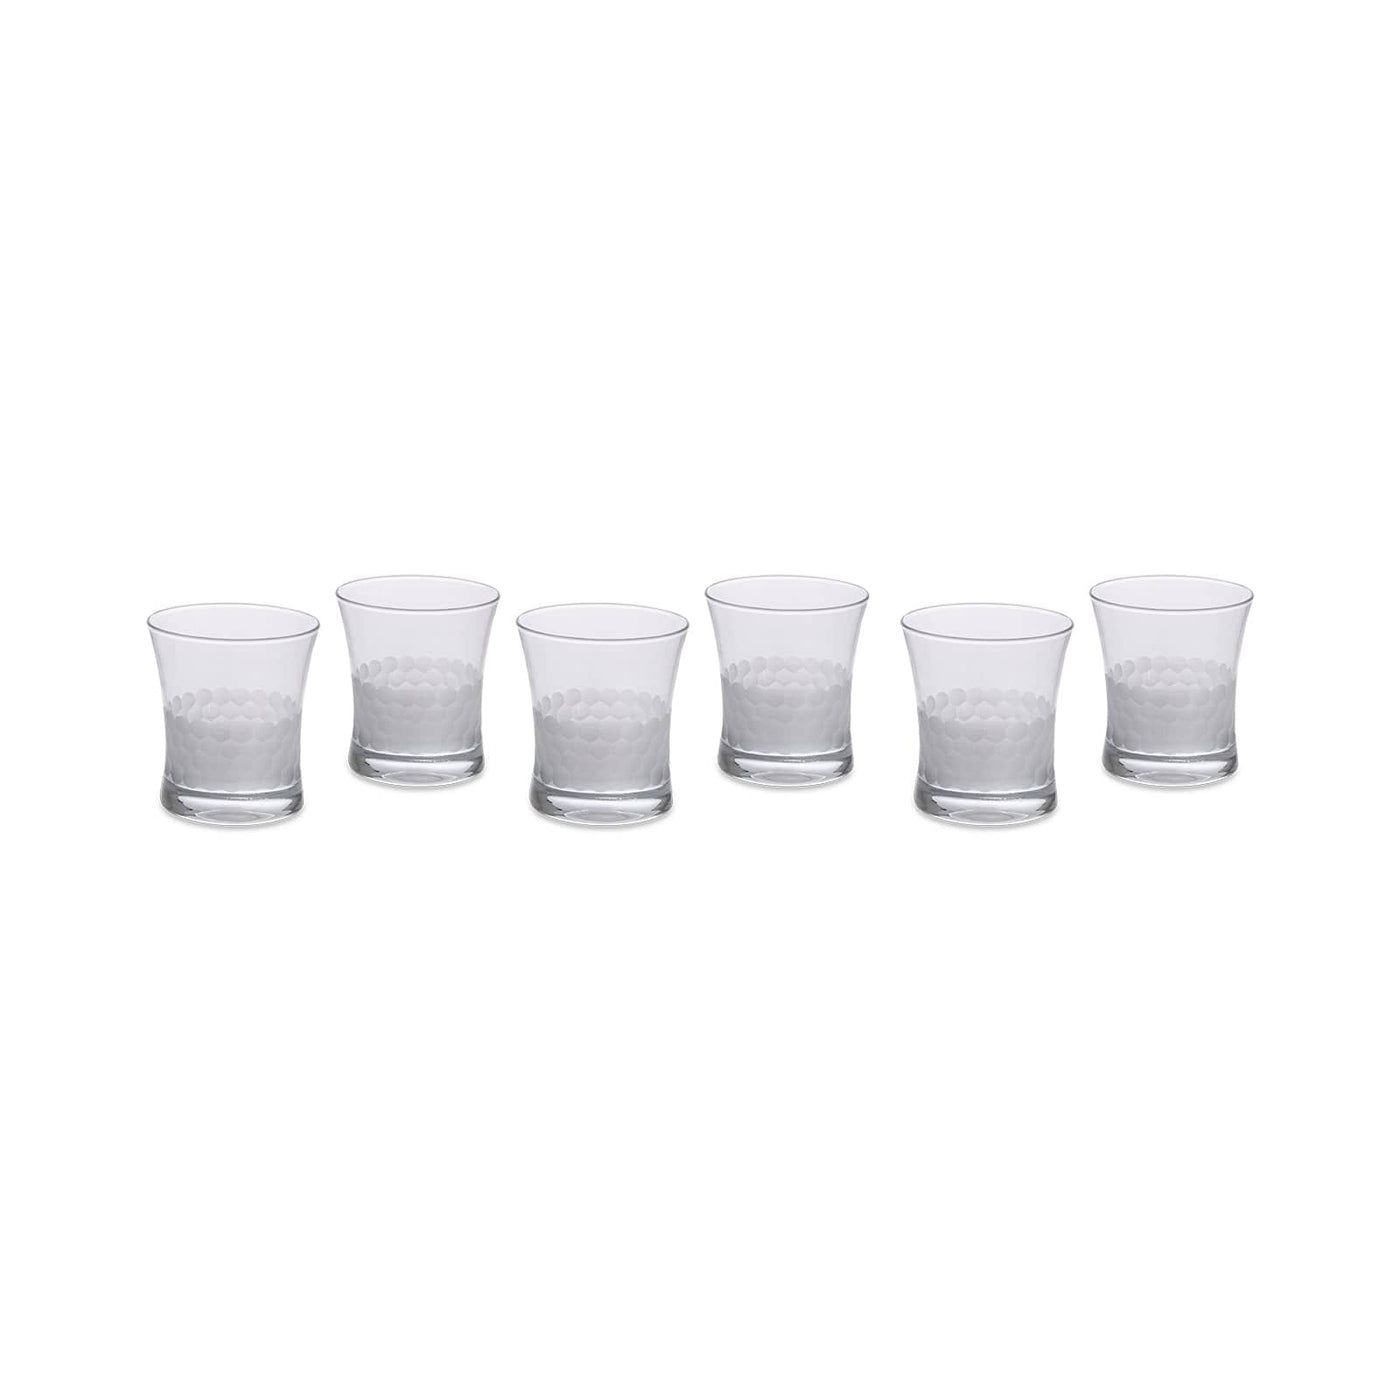 Bermondsey Set of 6 Glass Tumblers, White, 240 ml Glasses & Tumblers sazy.com